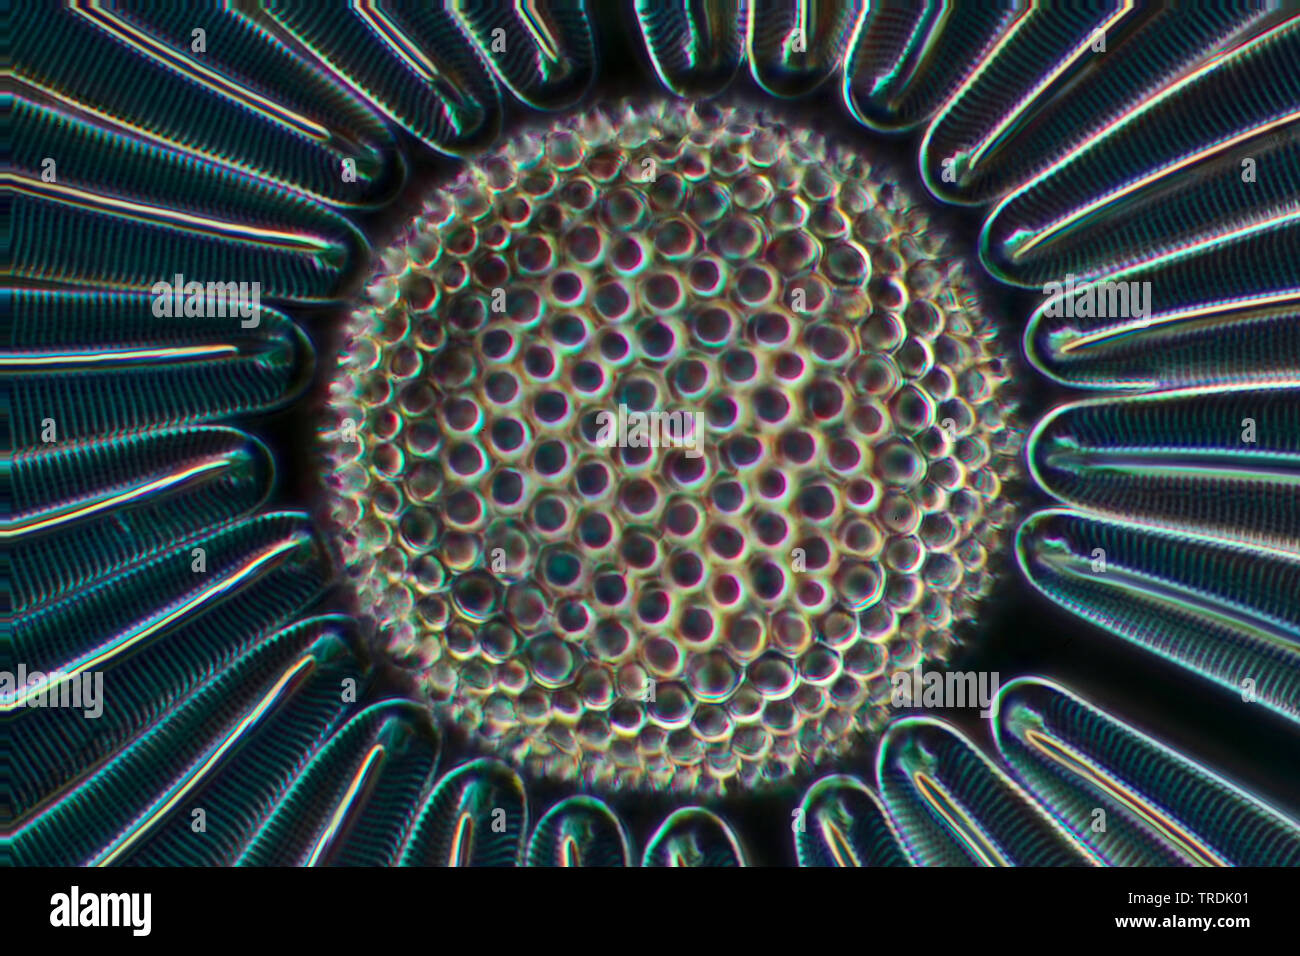 diatom (Diatomeae), dioatomeen in darkfield, x 160 Stock Photo